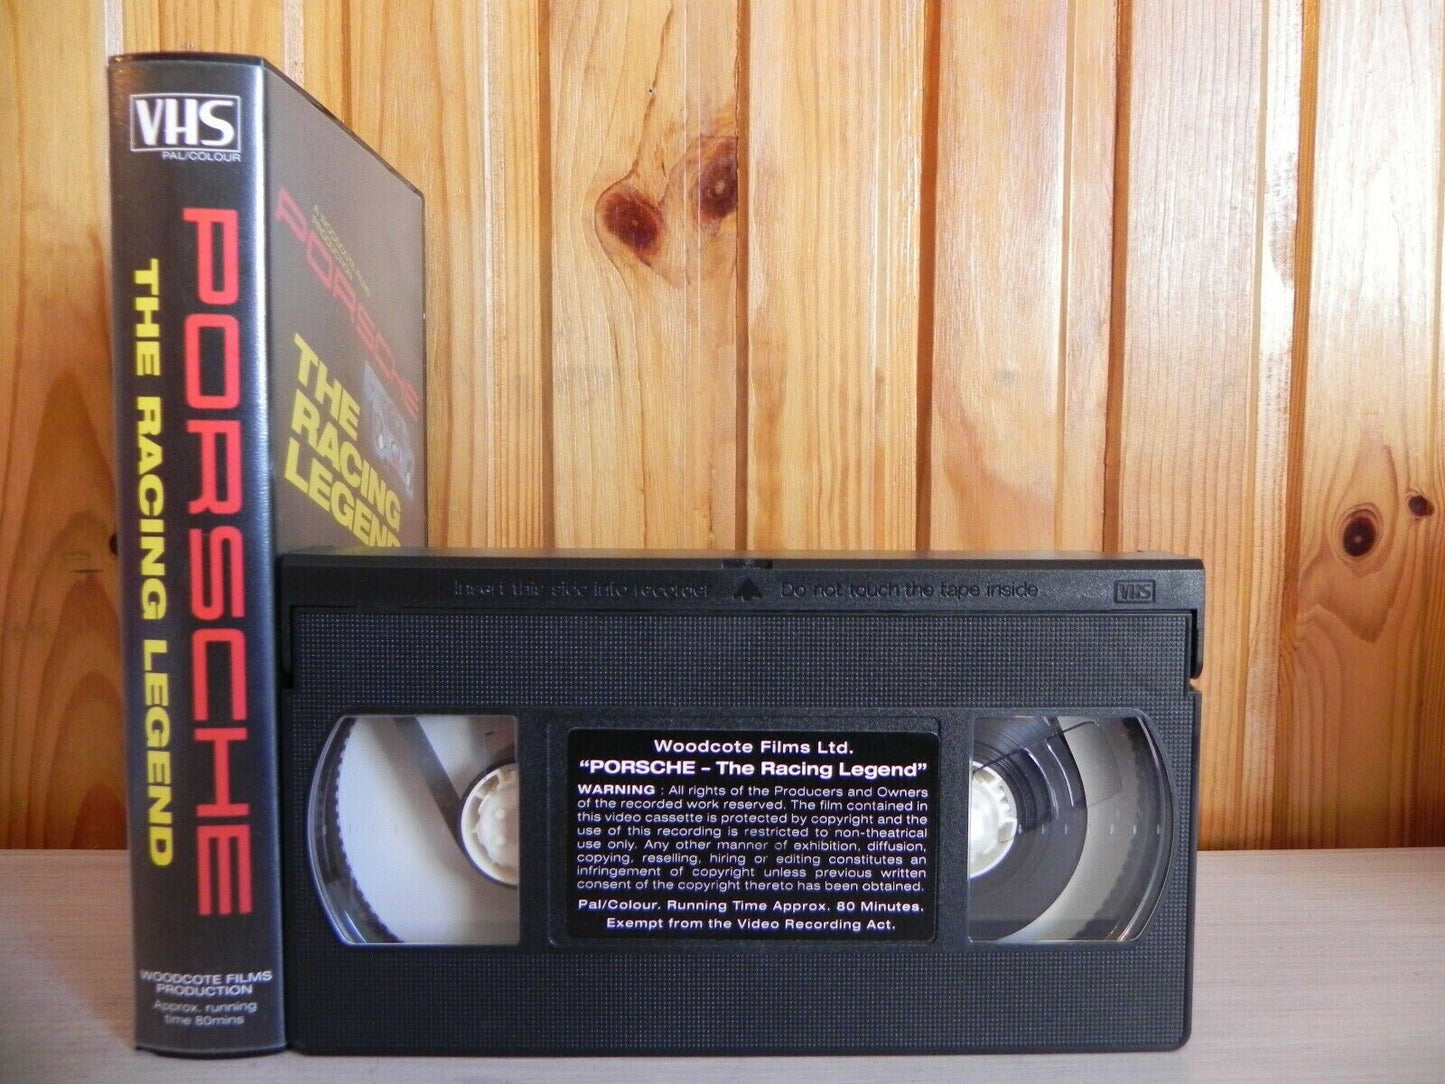 Porsche - The Racing Legends - History Of Porsche Motorsport - Pal VHS-